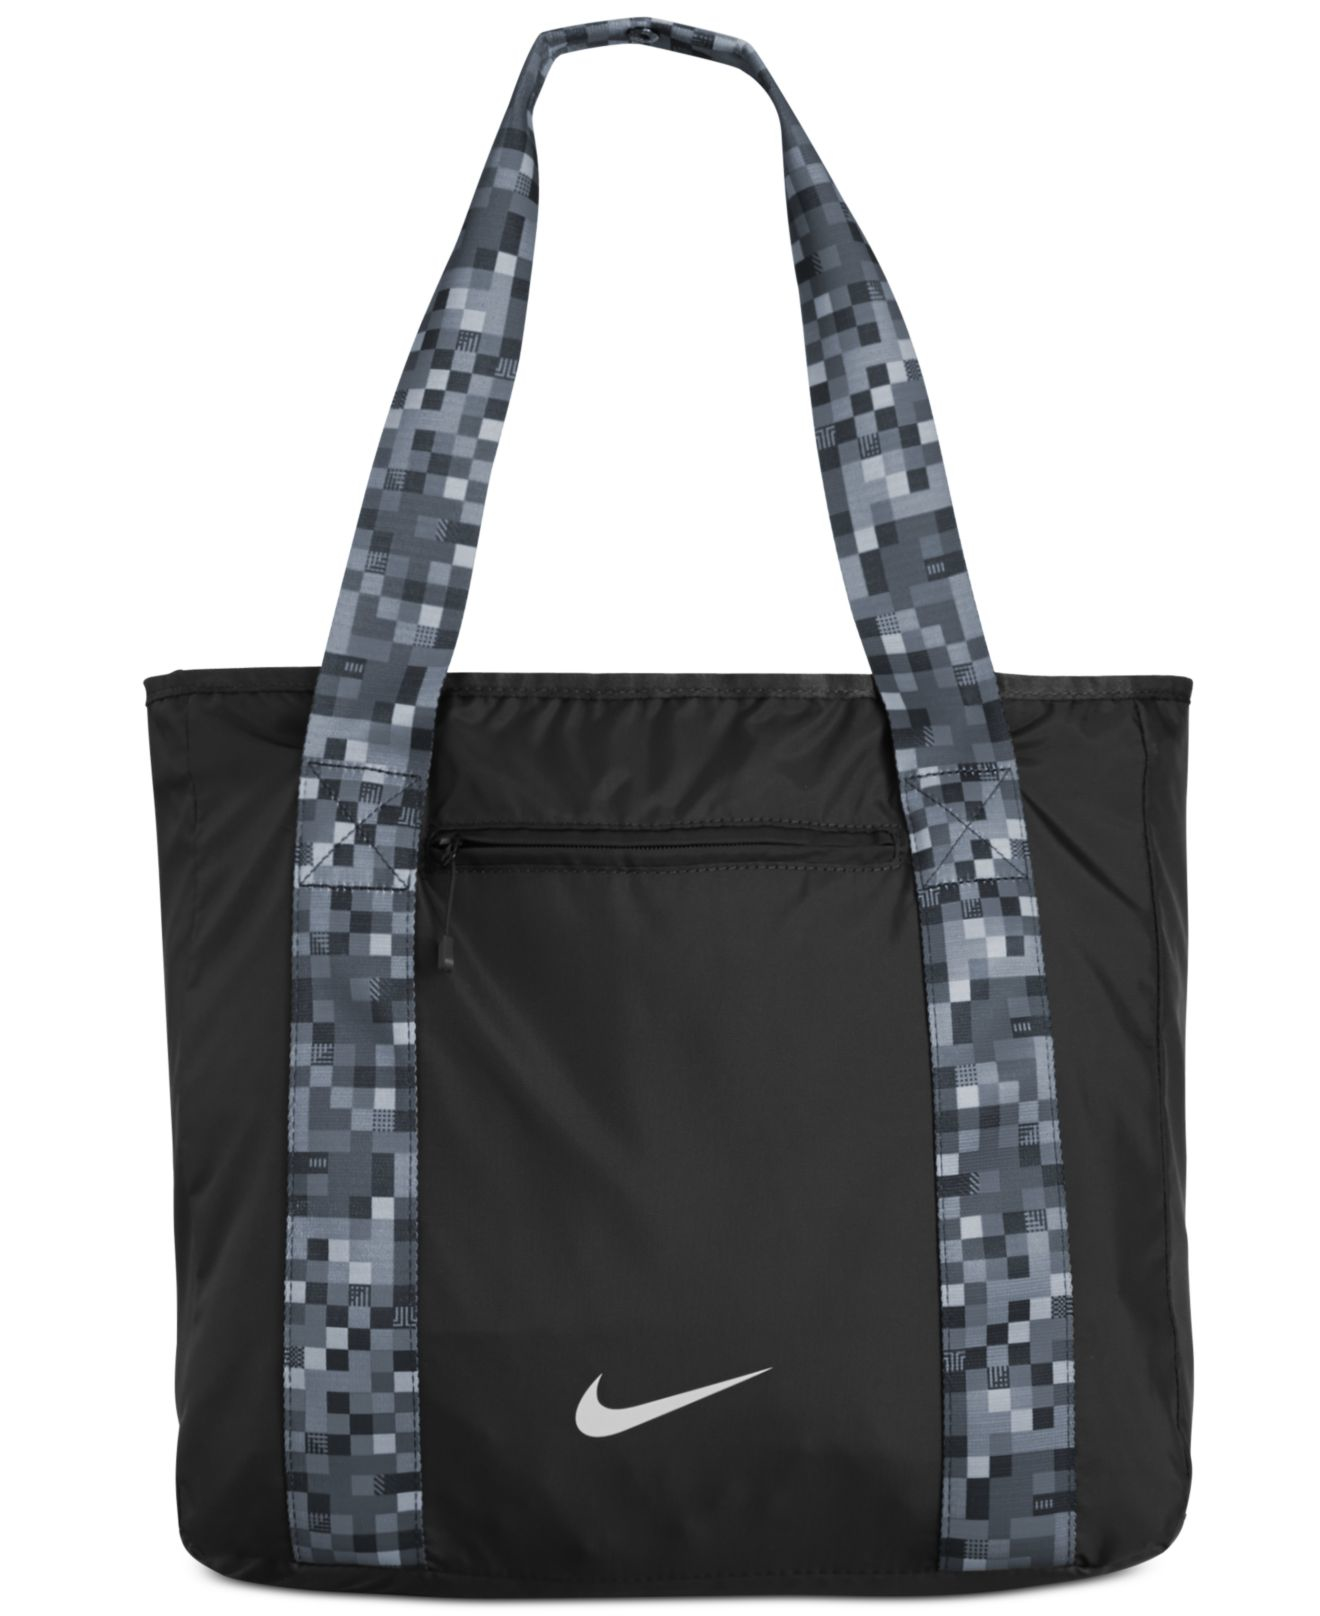 Small Nike Bag Uk | semashow.com